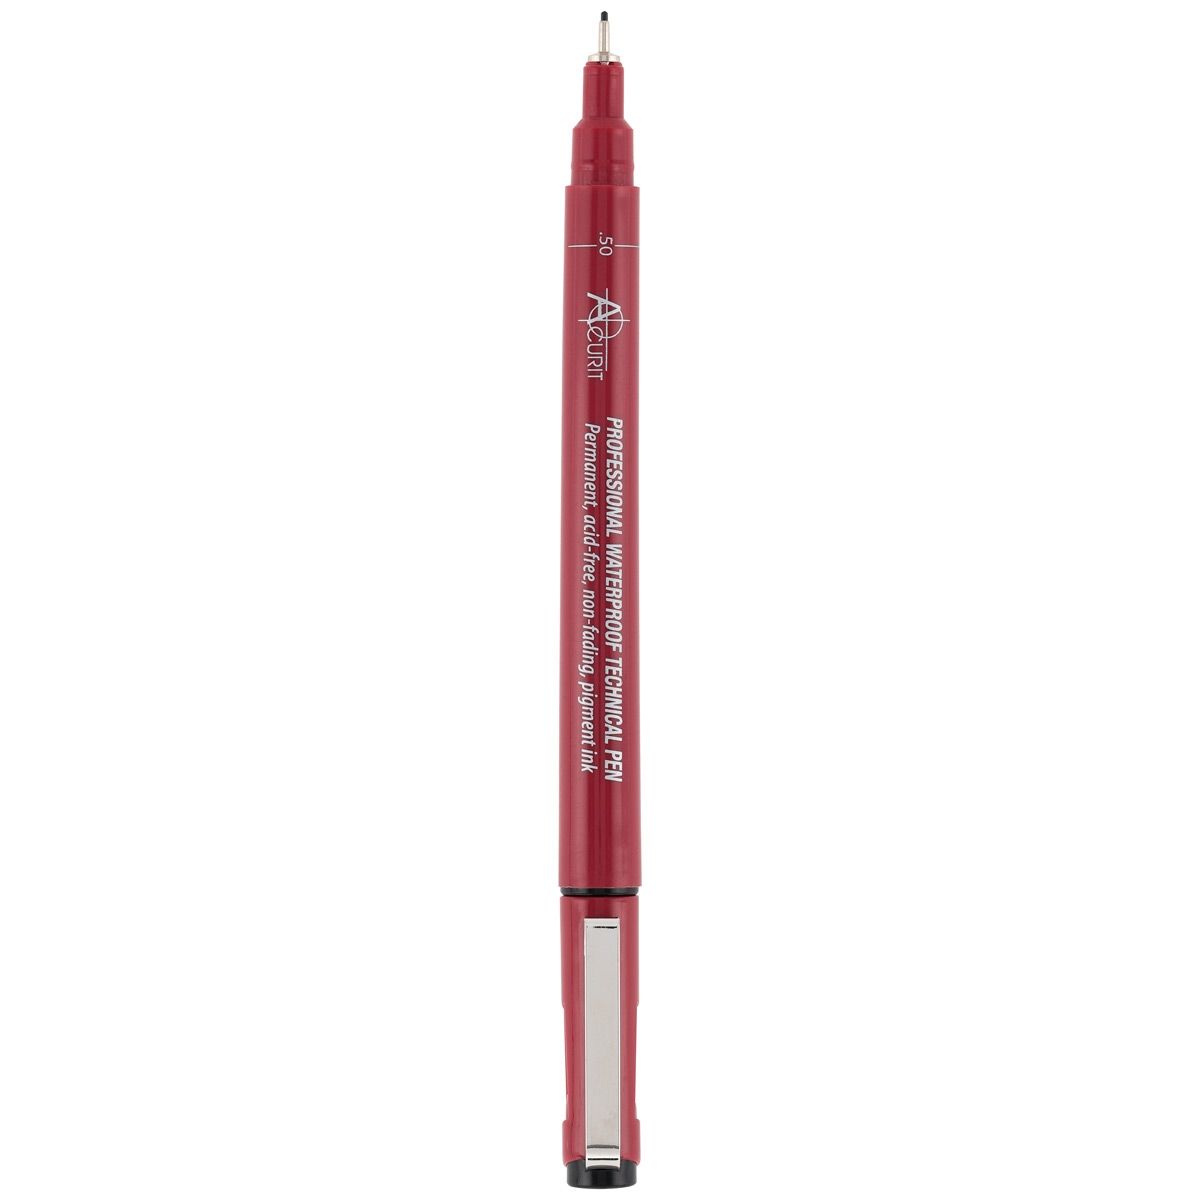 Acurit Technical Waterproof Pen .2mm, 12 Pack